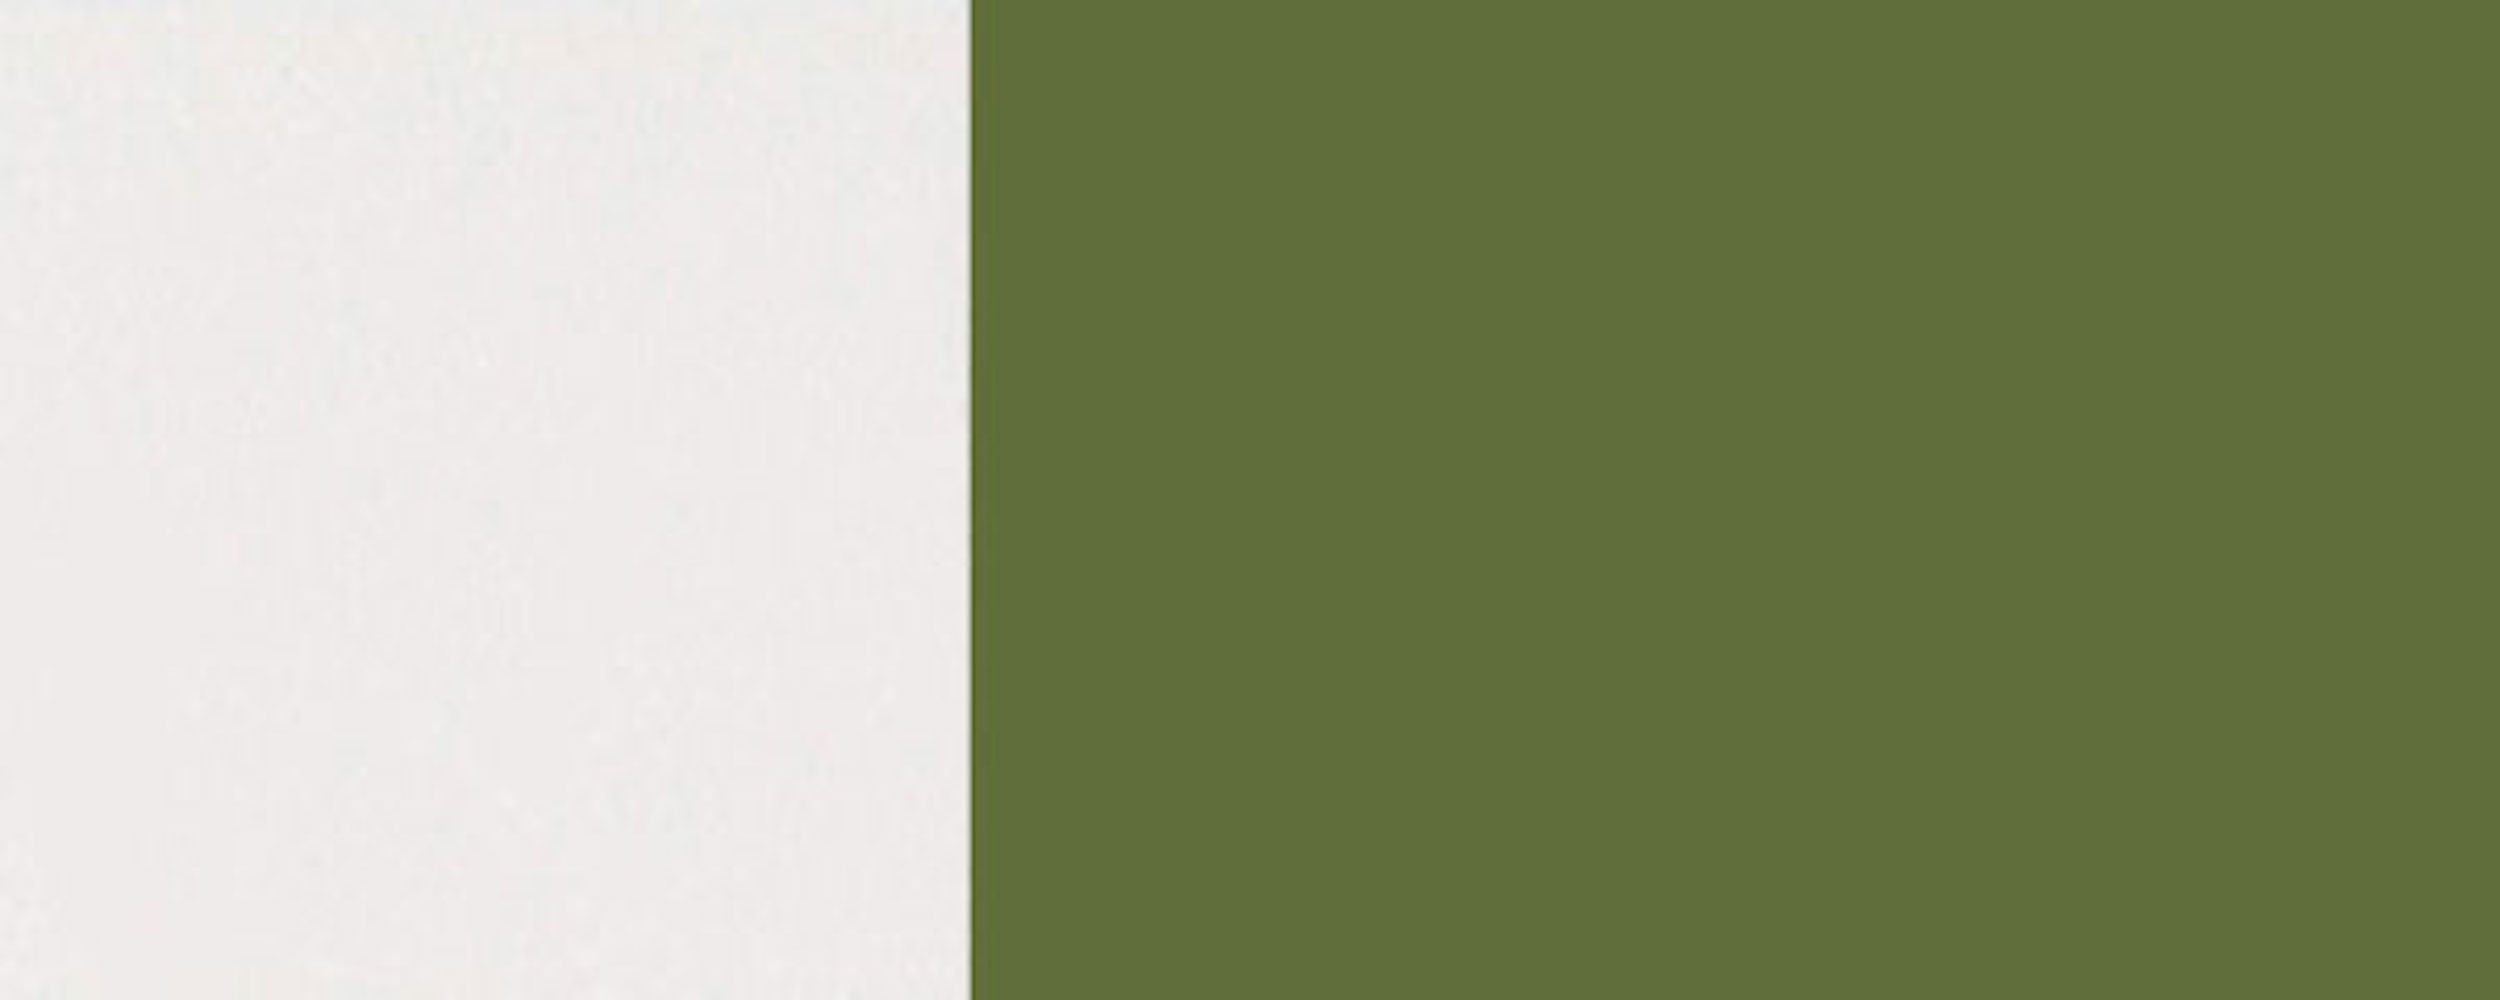 matt wählbar Eckhängeschrank farngrün Glaseinsatz Front- Feldmann-Wohnen 60cm und (Rimini) 1-türig 6025 mit RAL Korpusfarbe Rimini